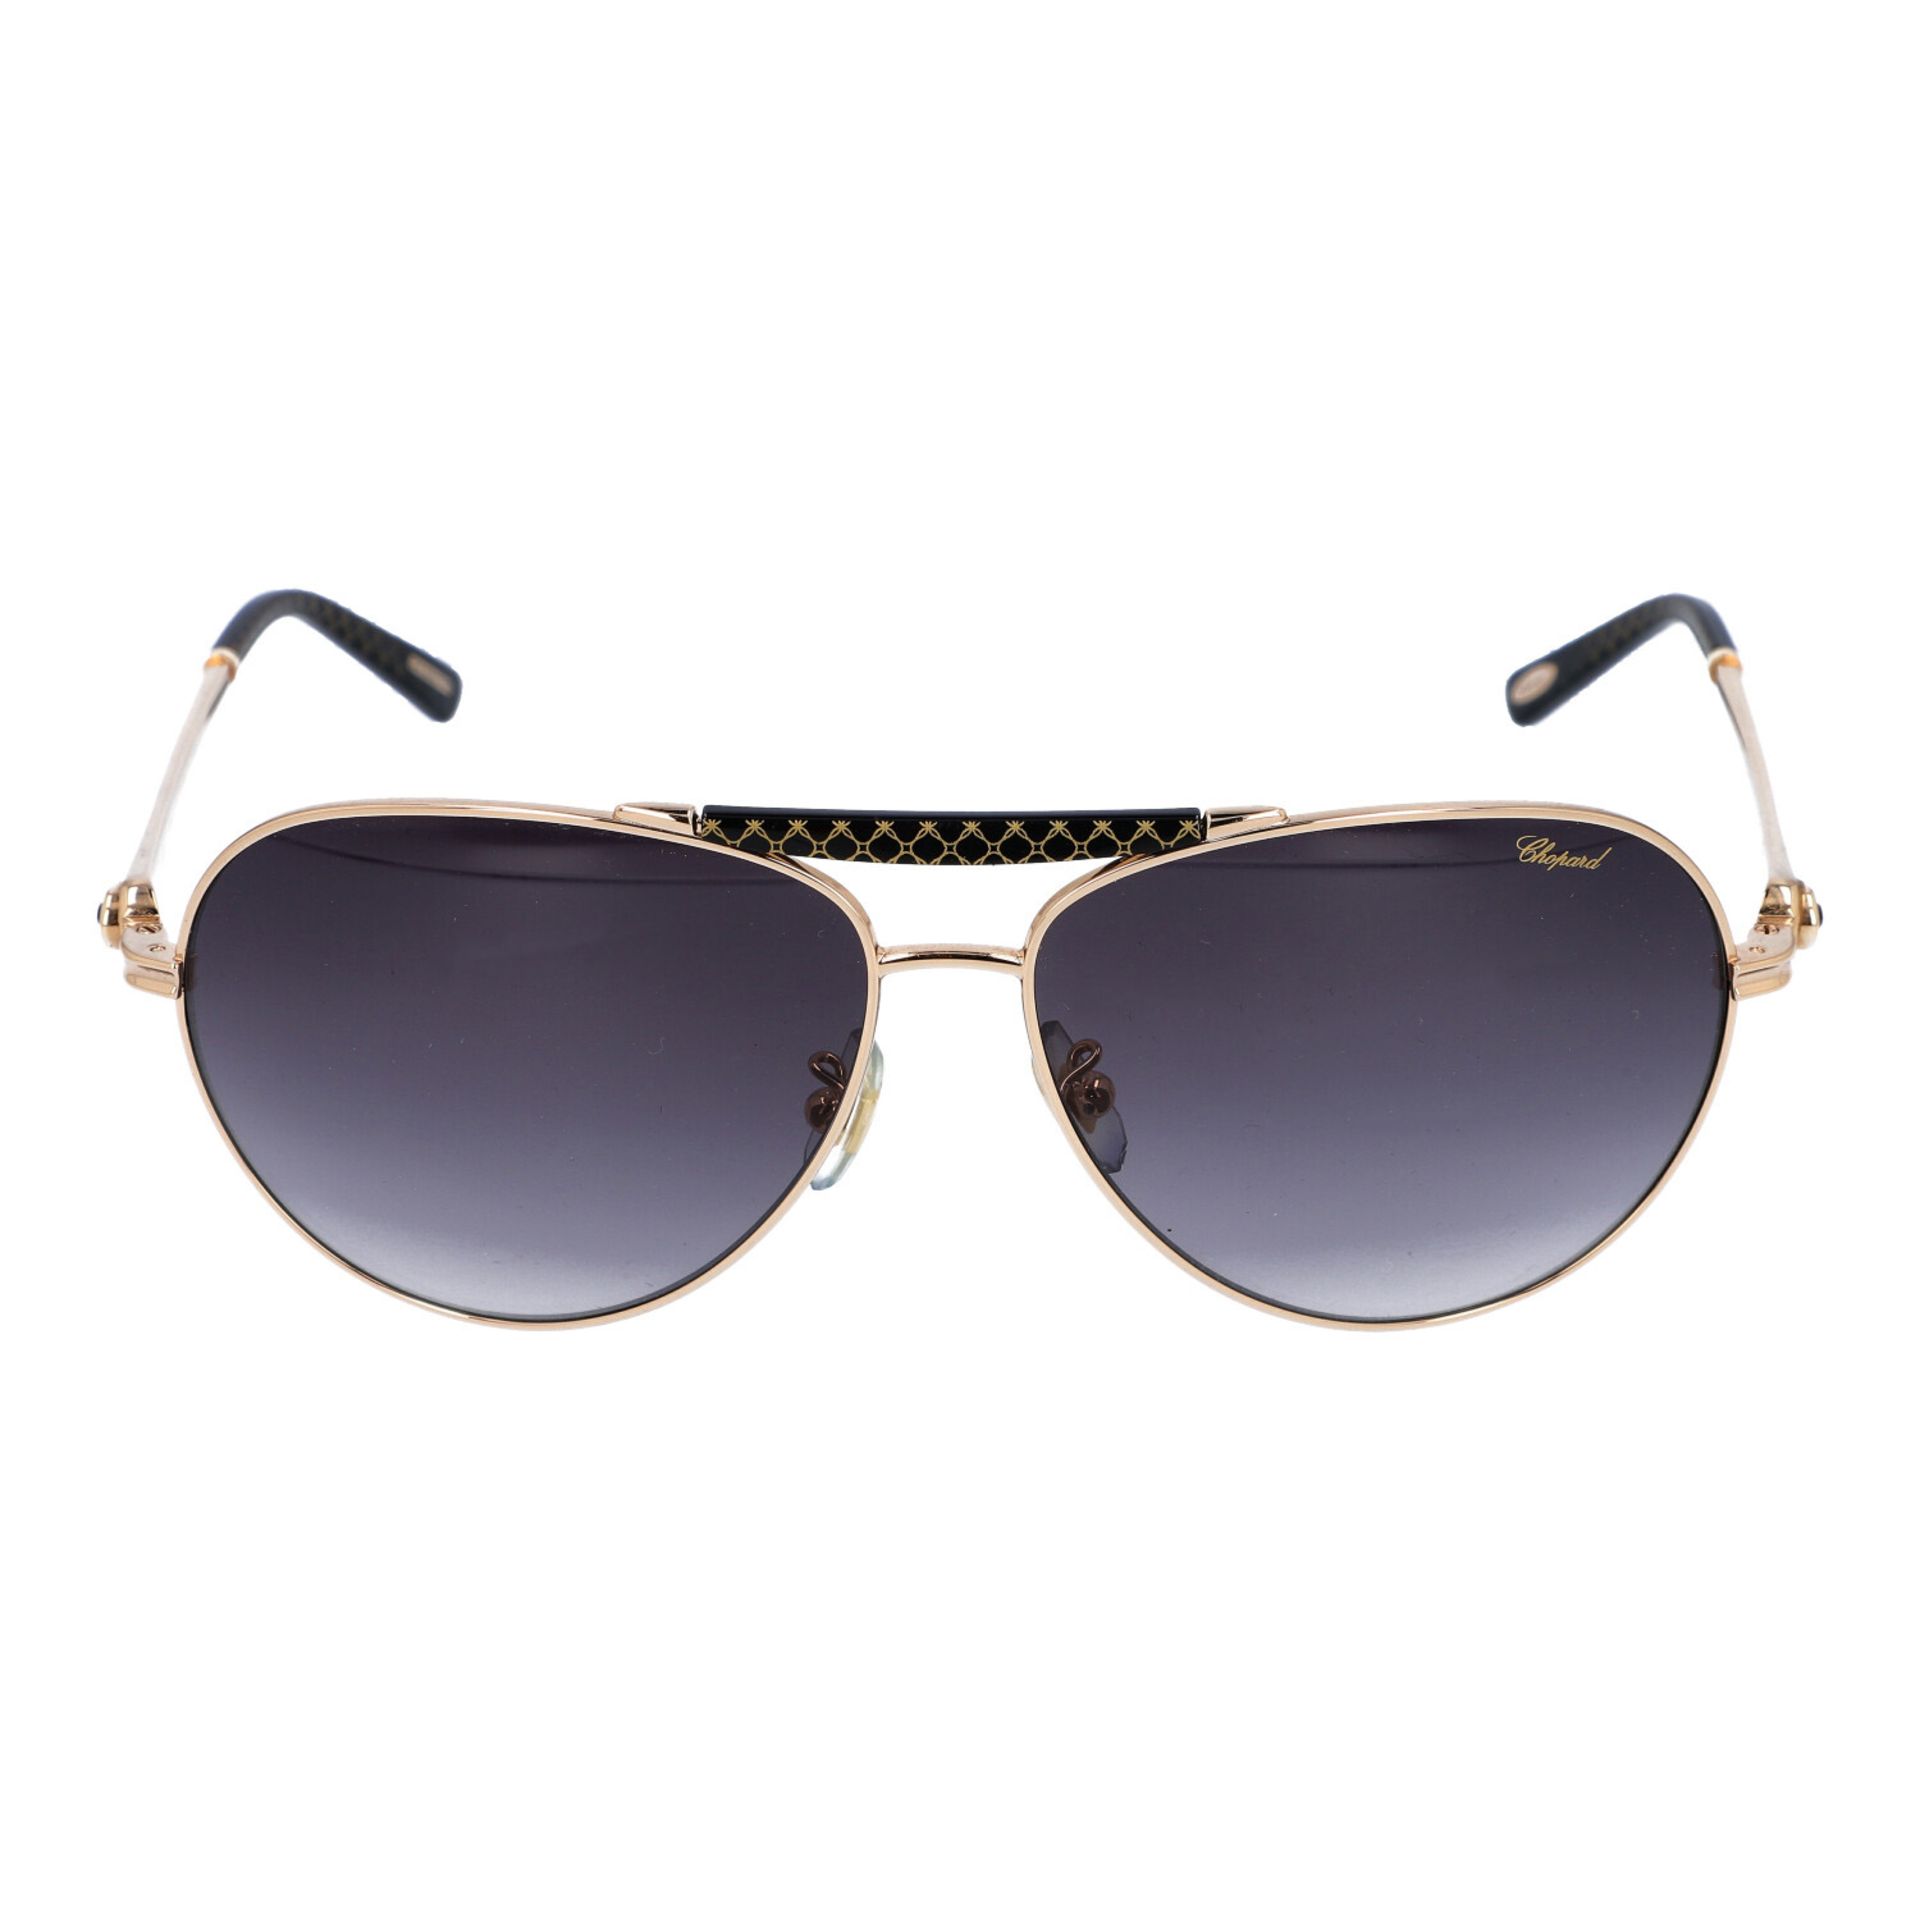 CHOPARD Sonnenbrille.NP.ca.: 600,-€. Goldafarbenes Metallgestell im Aviator-Design, dunkelgetönte